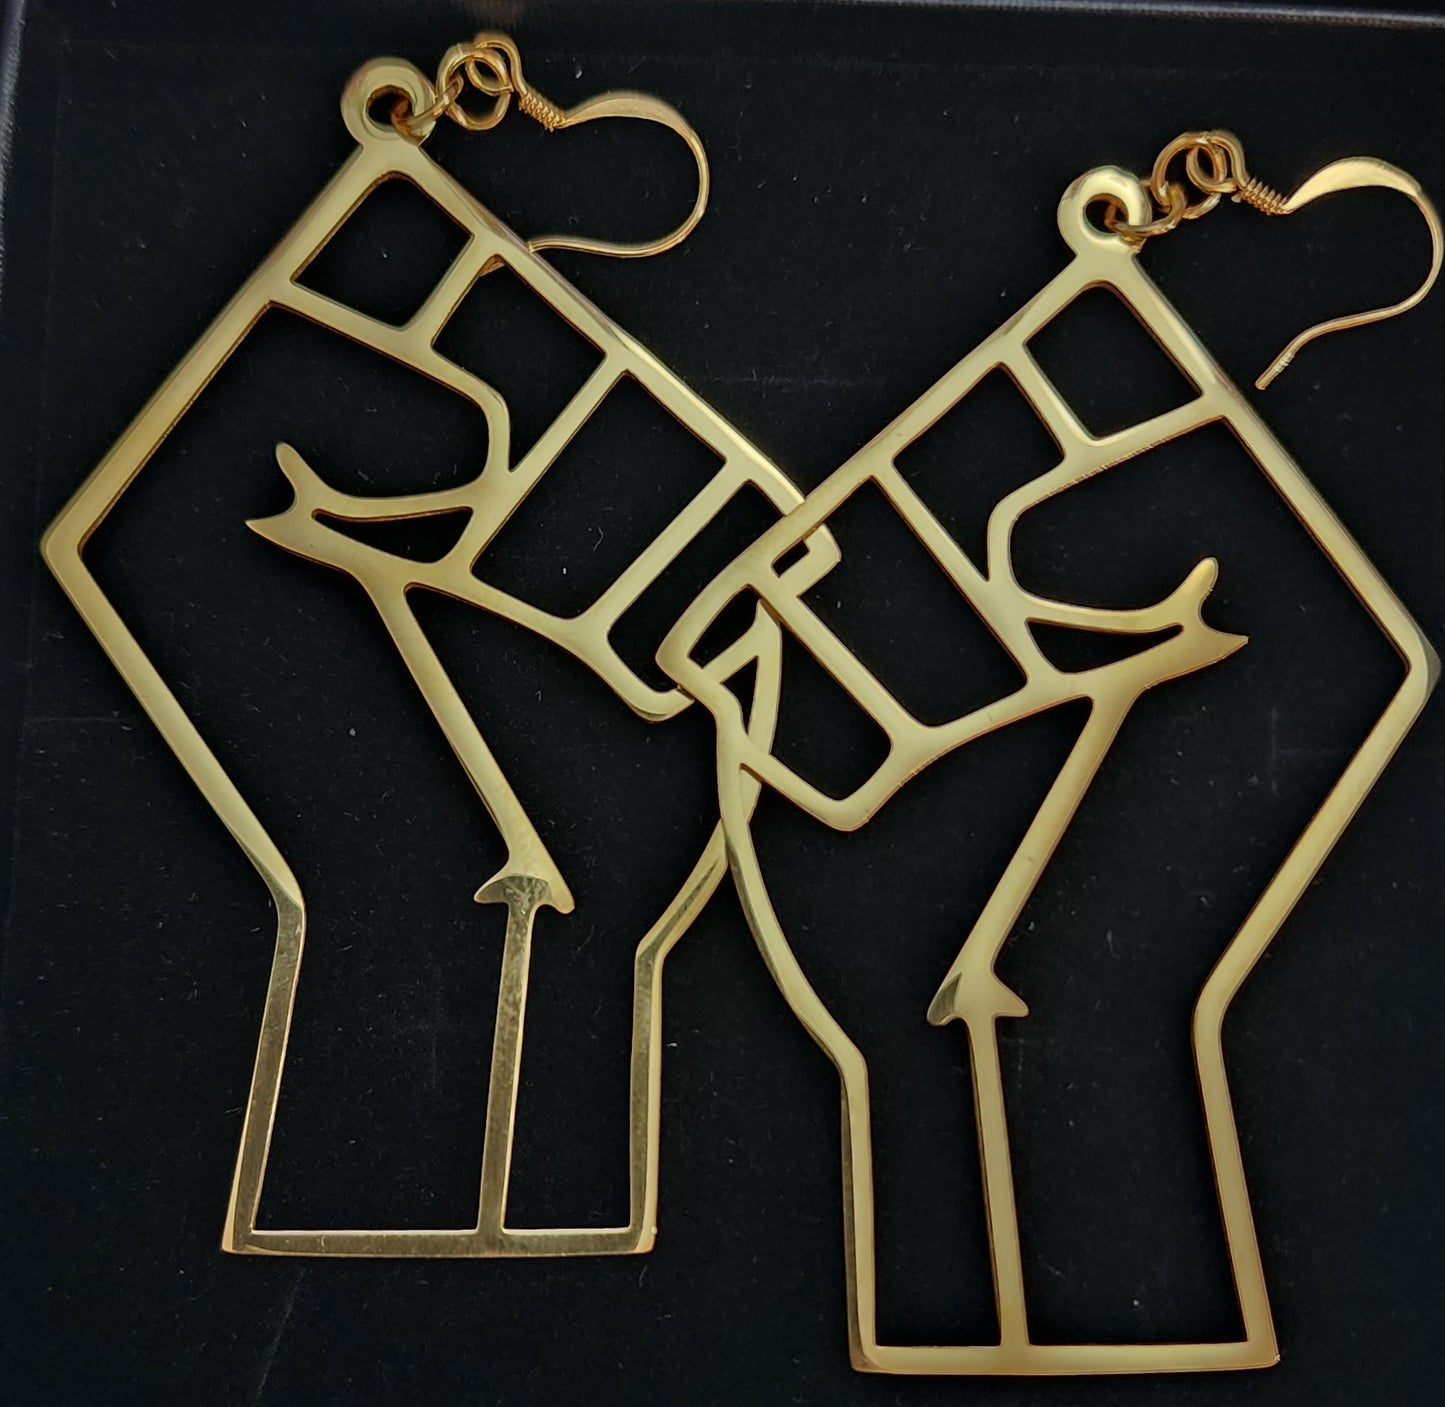 14k Gold plated Fist Earrings